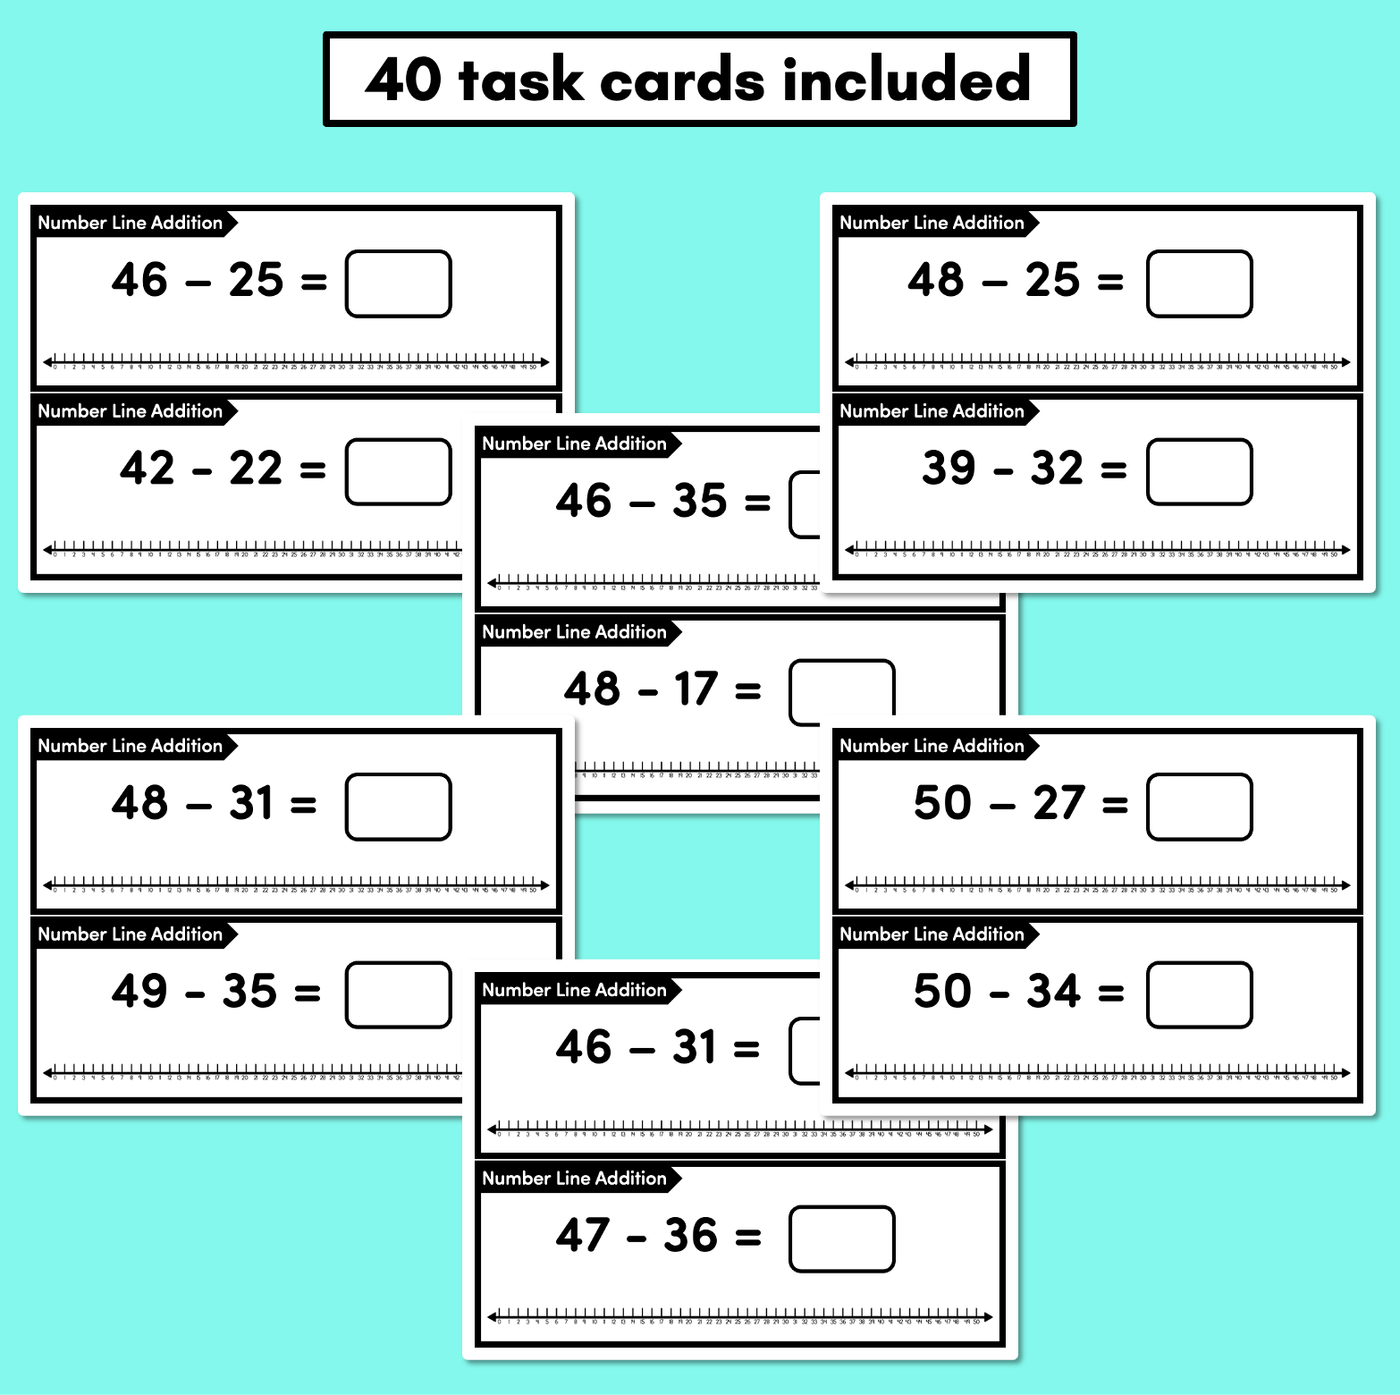 Number Line Subtraction Task Cards Level 2: 2-Digit Subtraction (Jump Strategy)